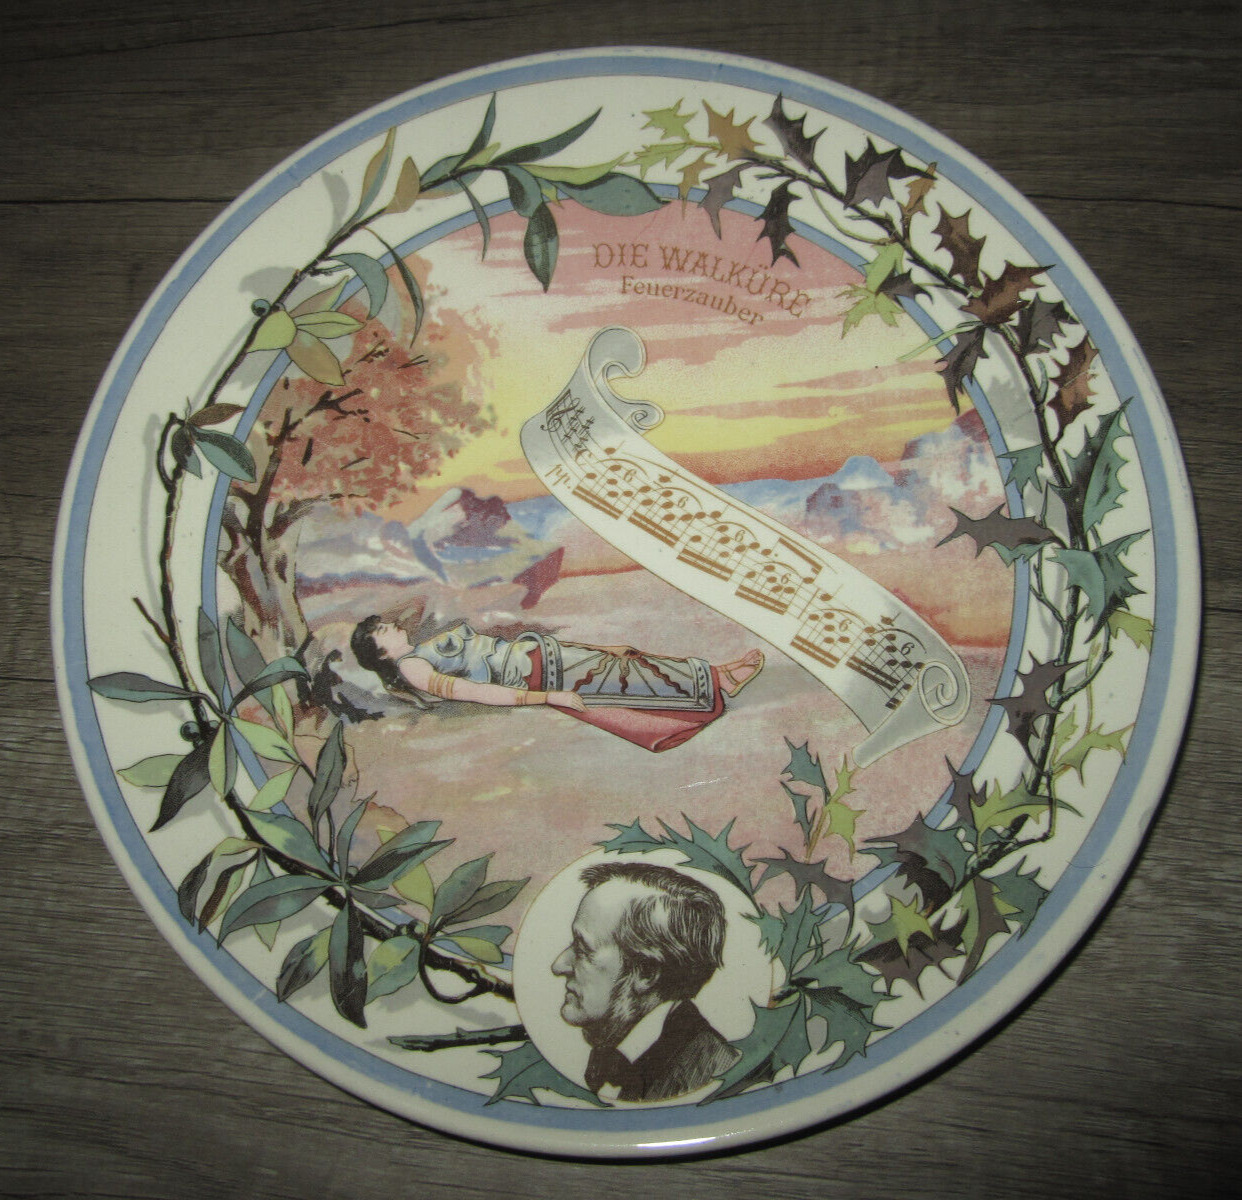 Antique French faience Sarreguemines plate, Die Walkure opera Richard Wagner